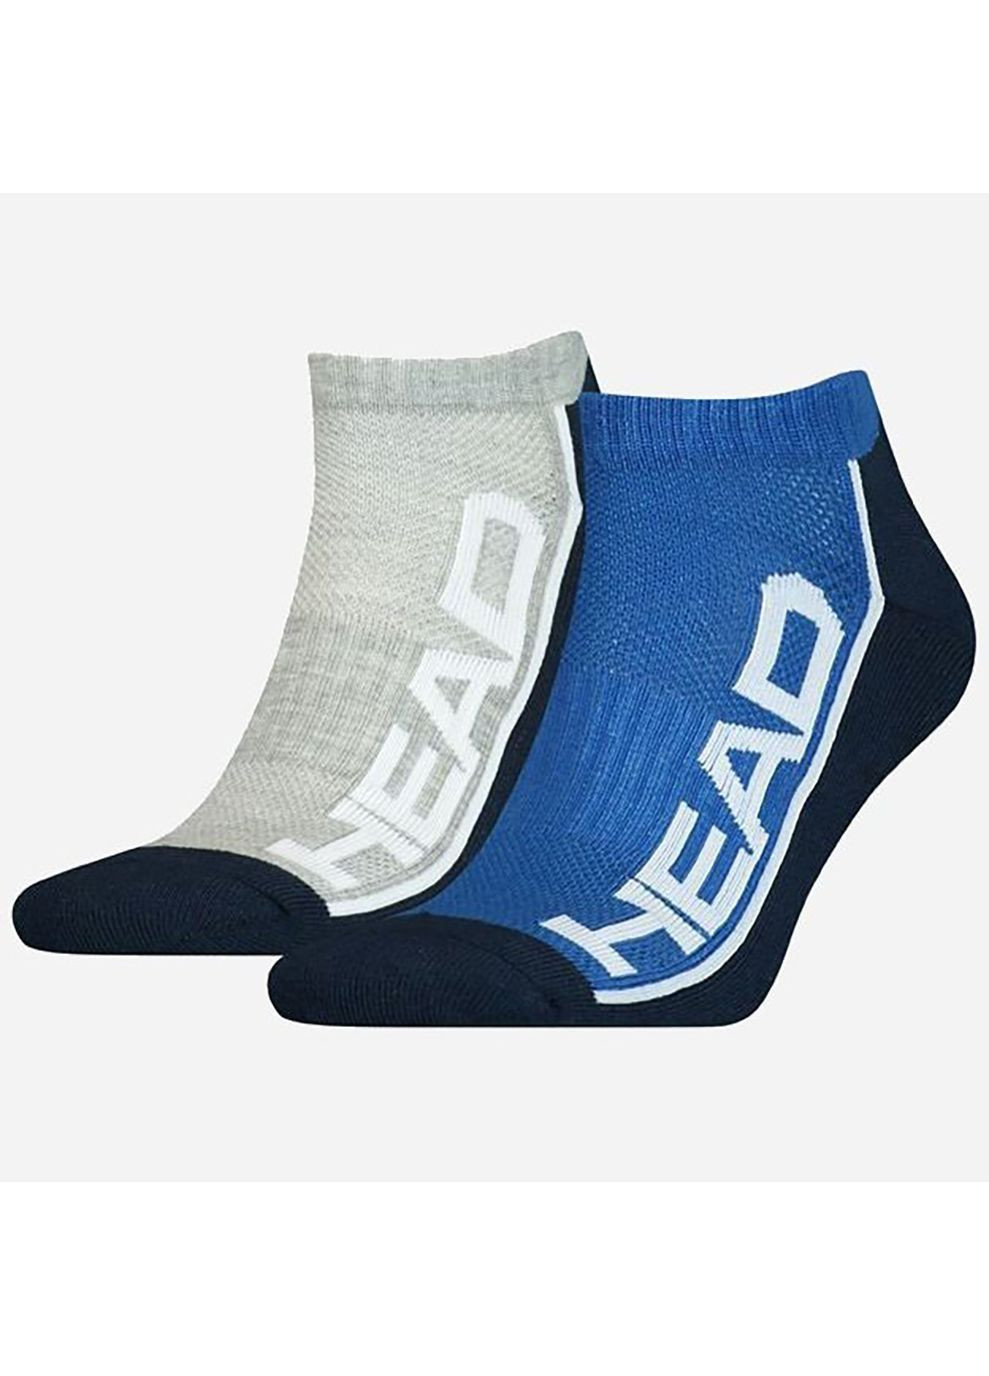 Носки Performance sneaker 2-pack blue/grey Серый Синий Head (282316674)